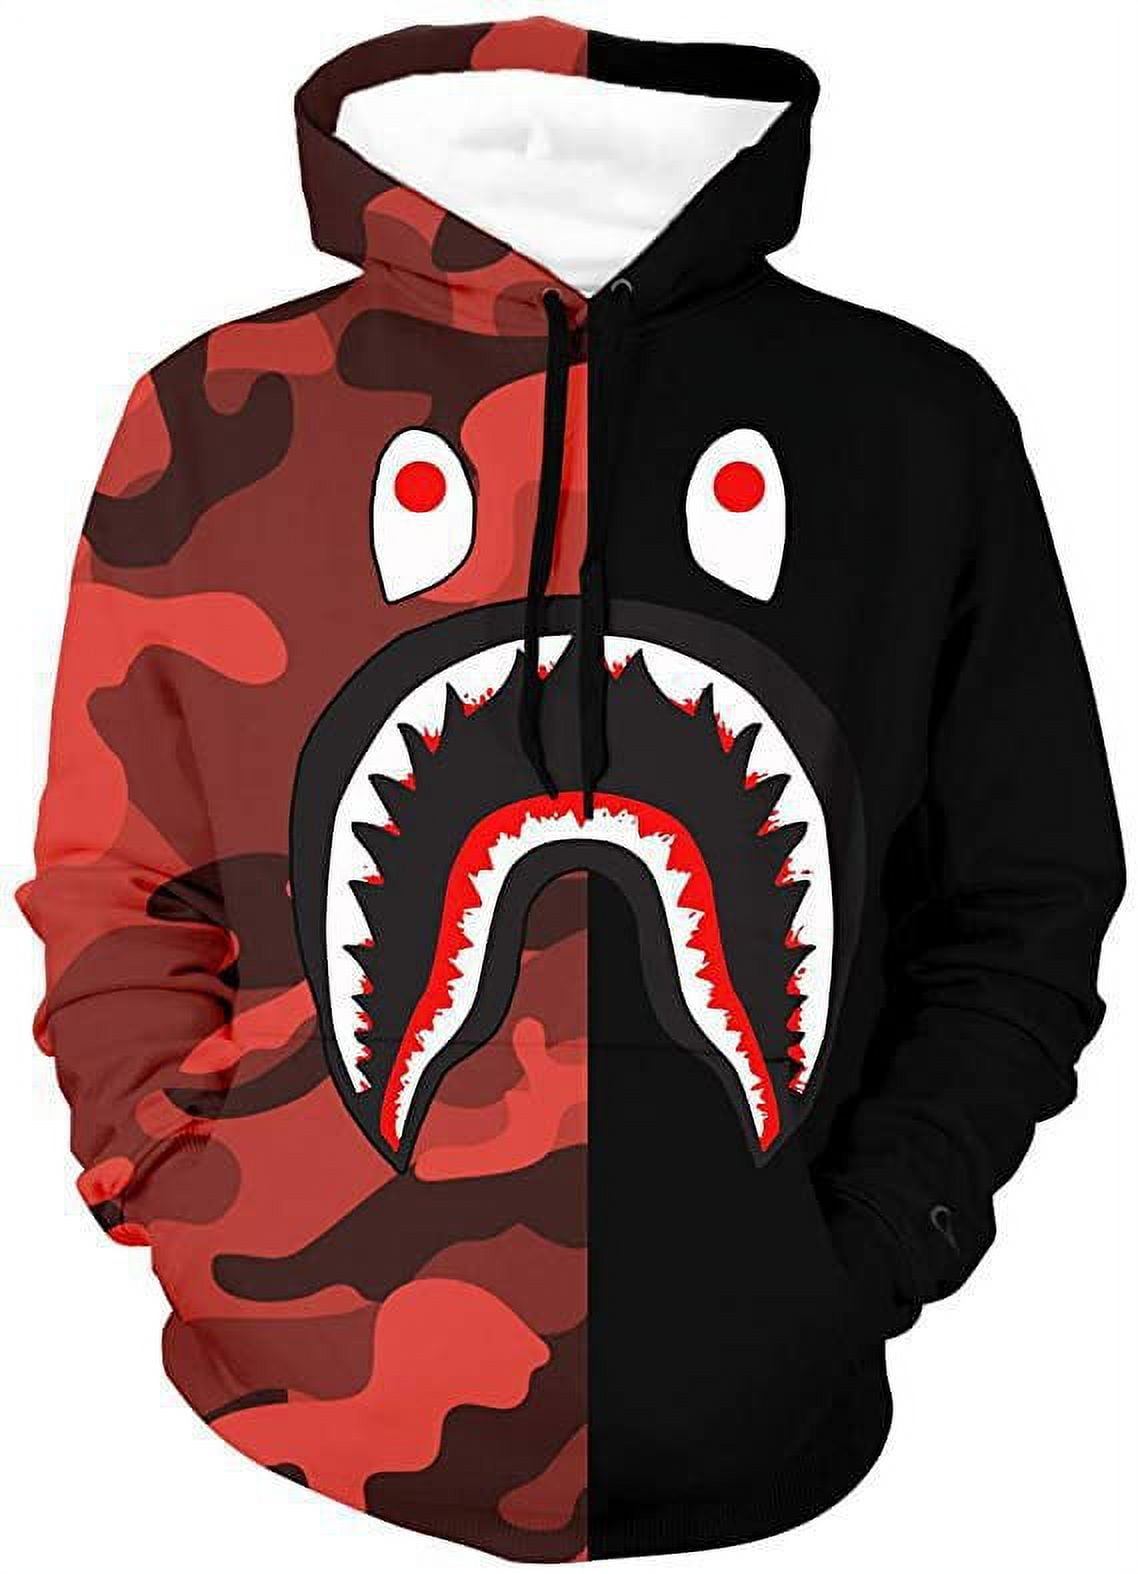 bape shark mouth